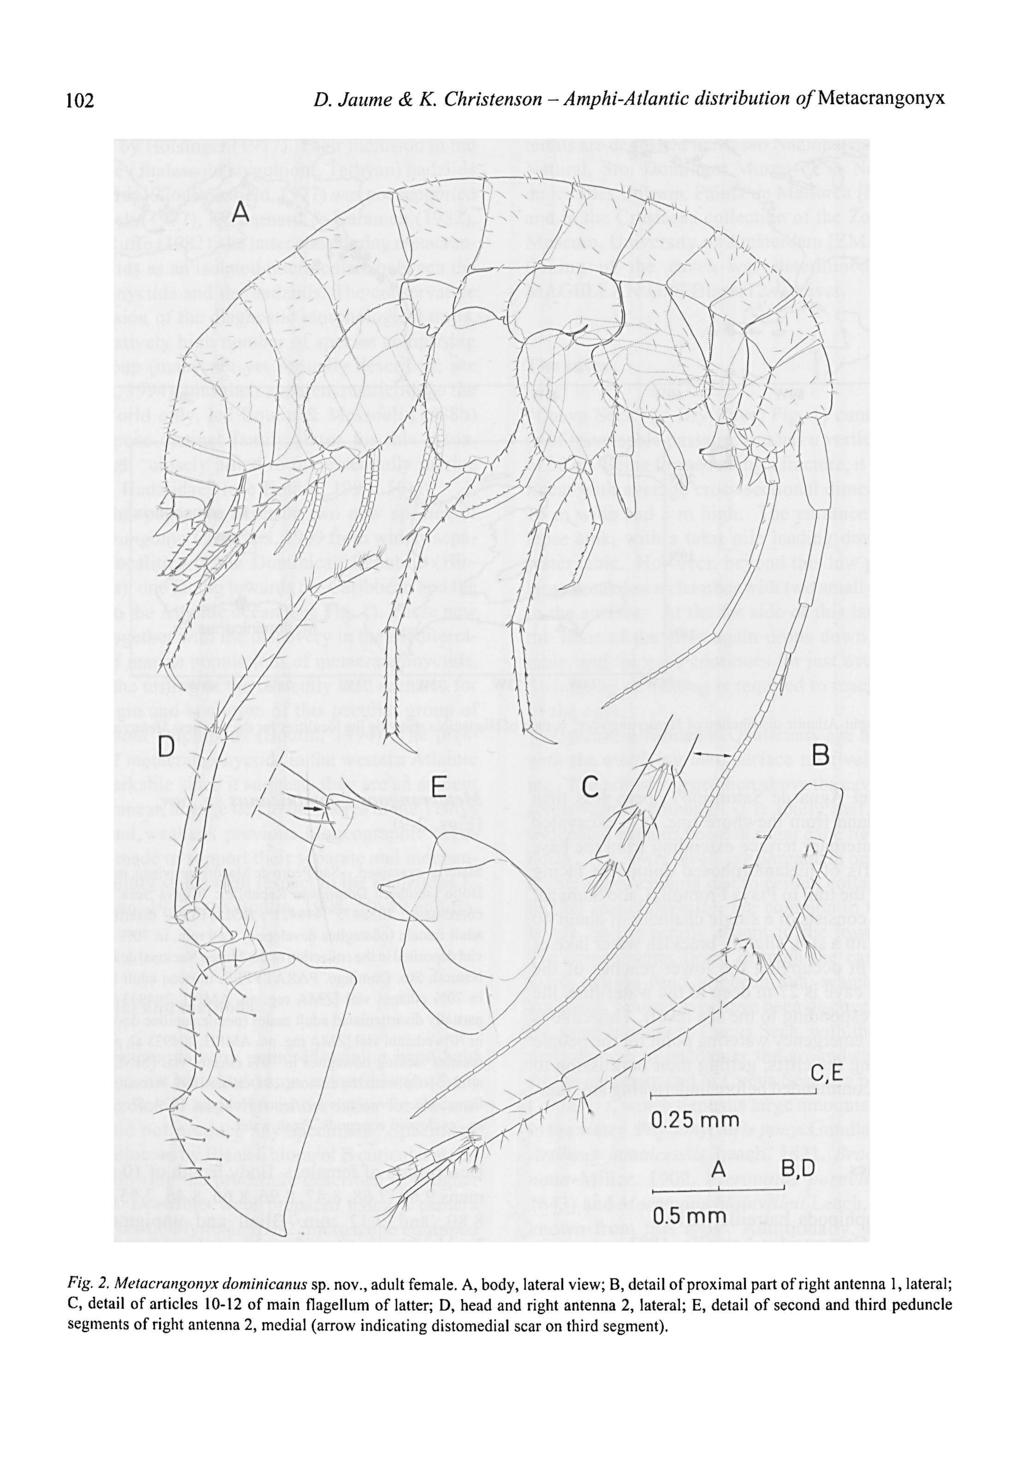 Amphi-Atlantic 102 D. Jaume & K. Christenson - distribution q/metacrangonyx Fig. 2. Metacrangonyx dominicanus sp. nov., adult female.